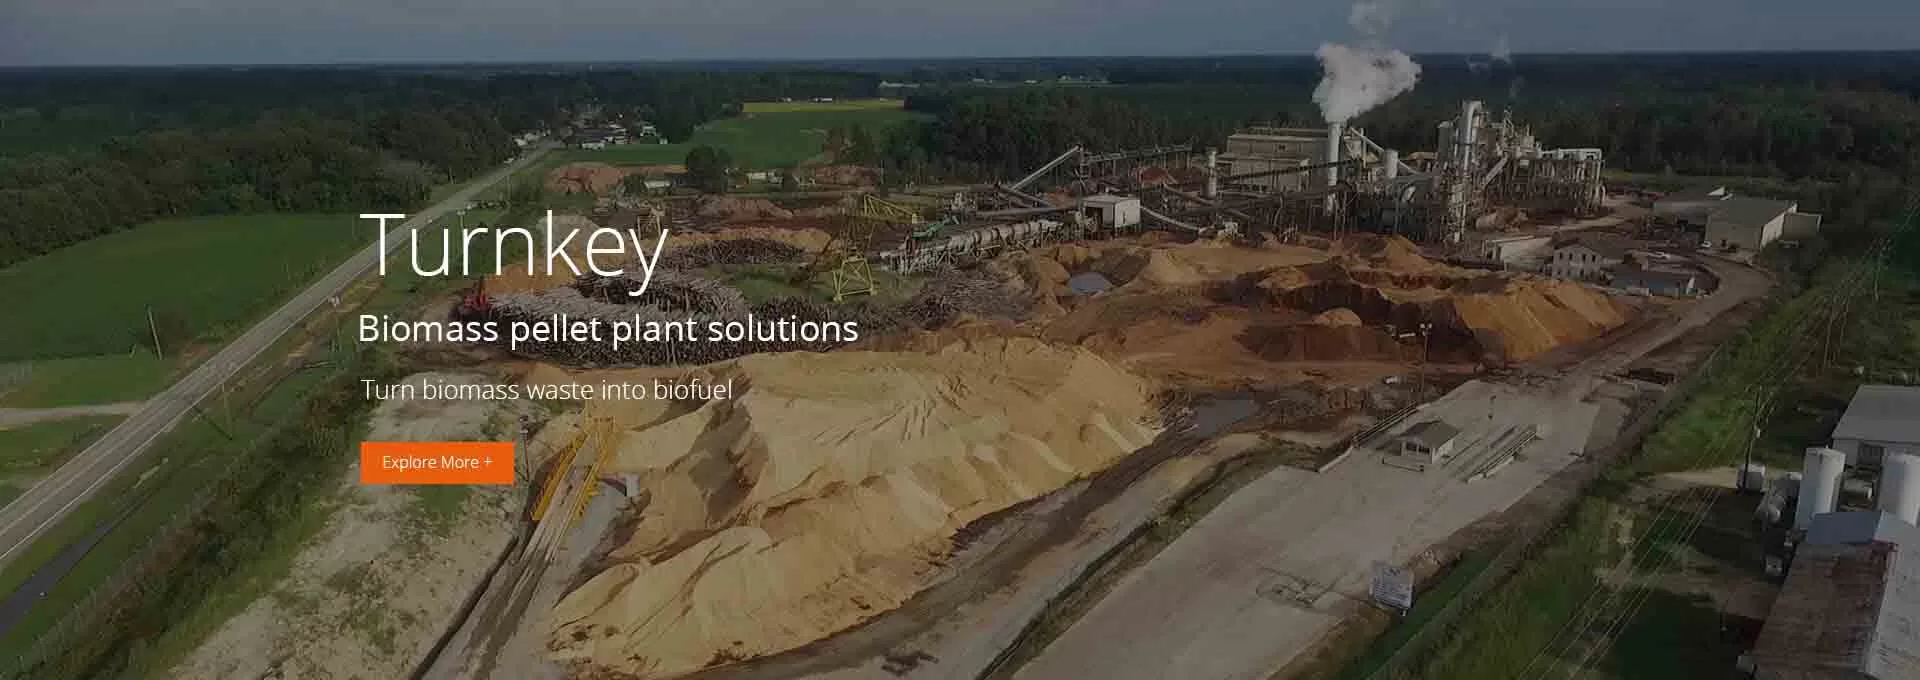 turnkey biomass pellet Plant solutions